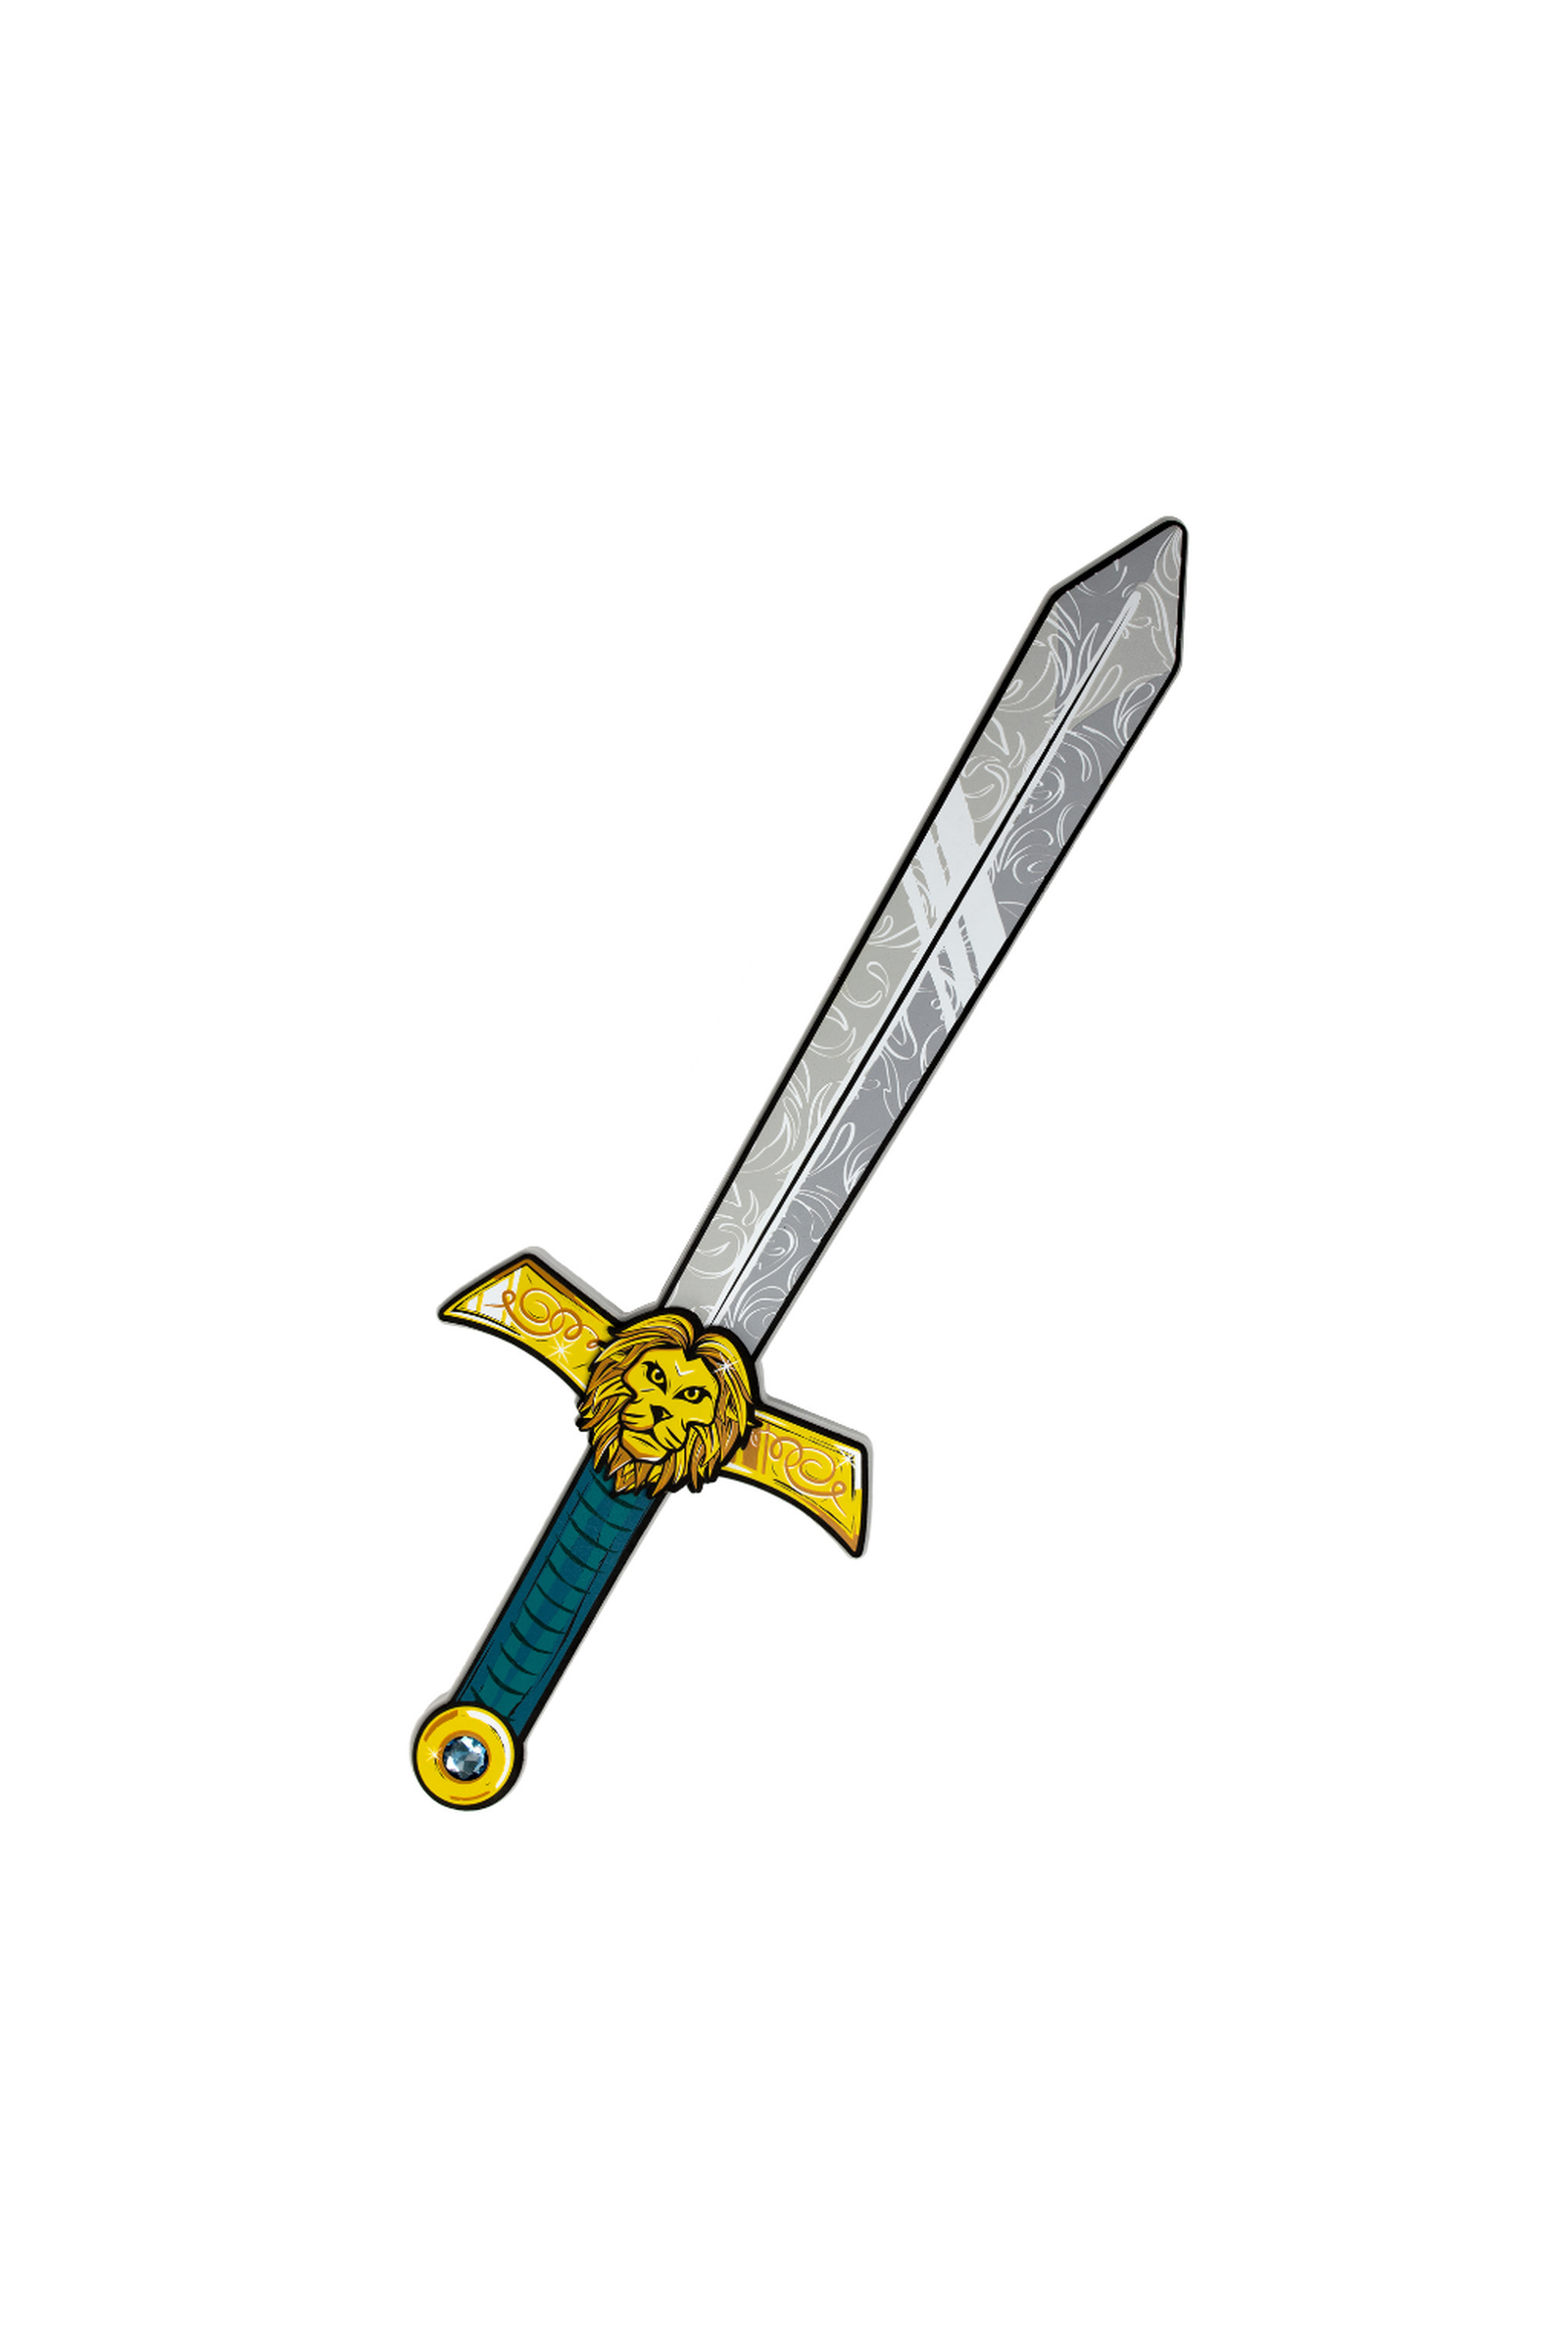 Lionheart Warrior EVA Sword